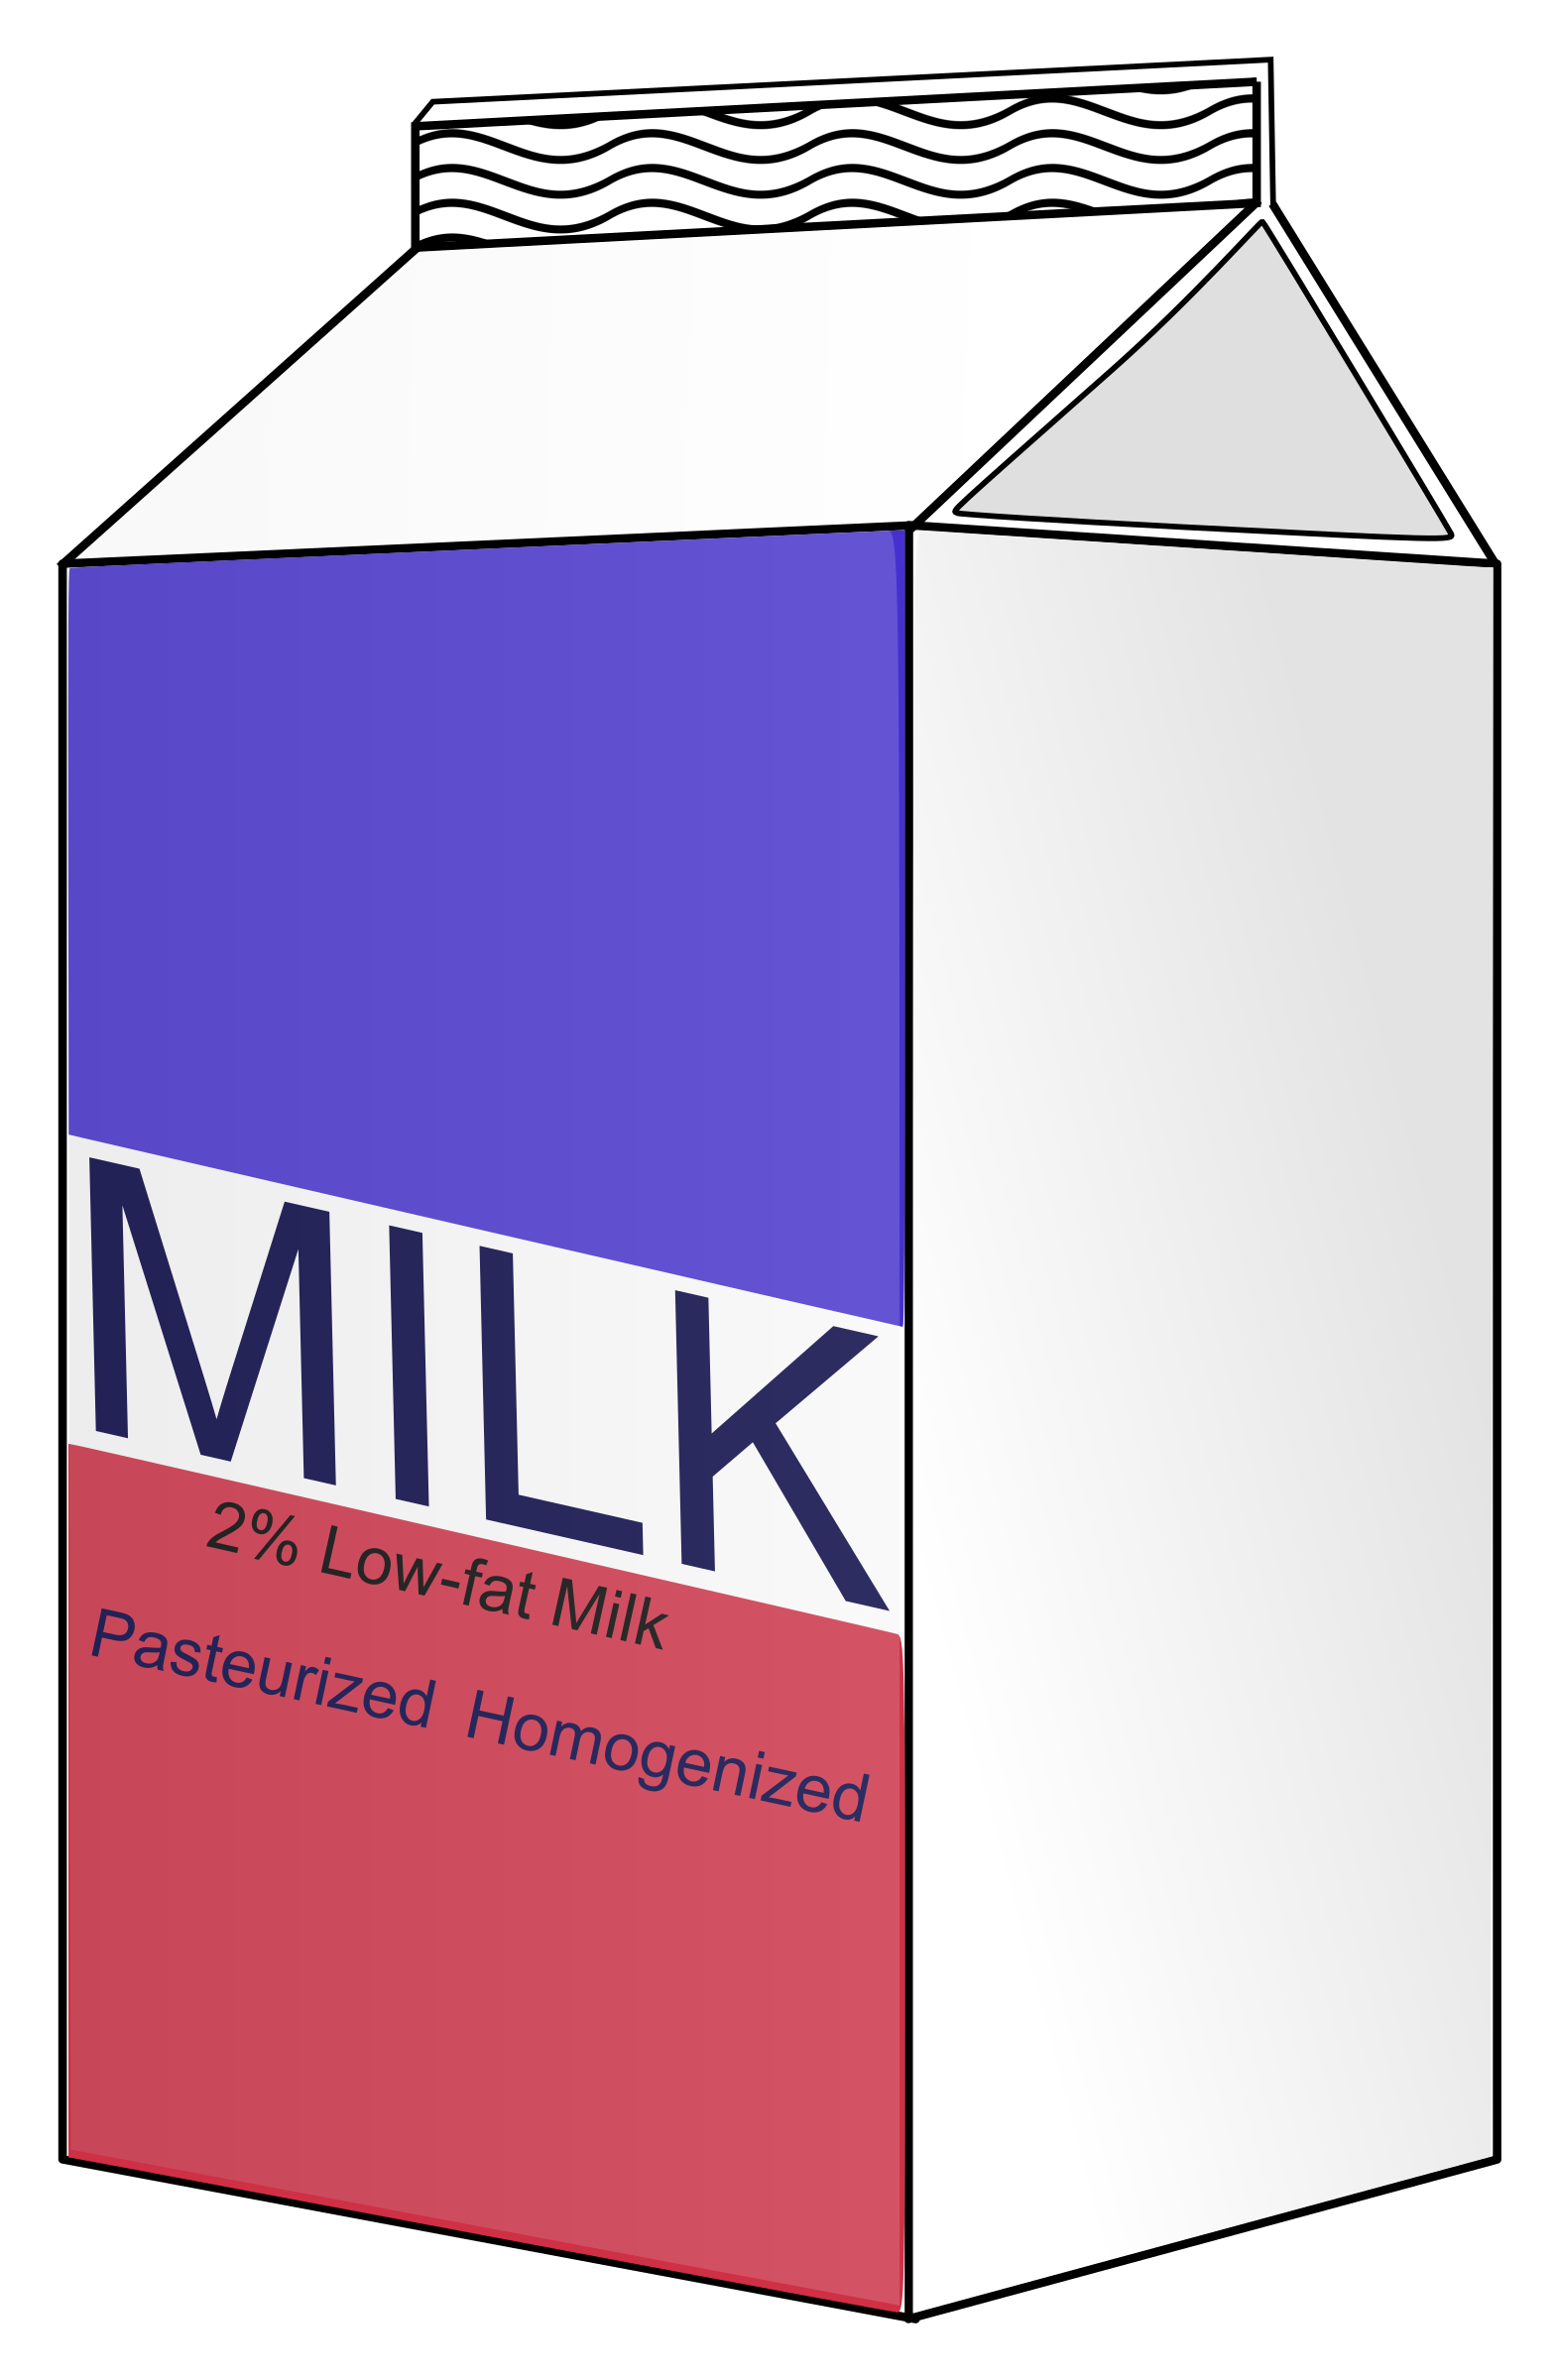  Milk  Carton Vector Clipart  image Free stock photo 